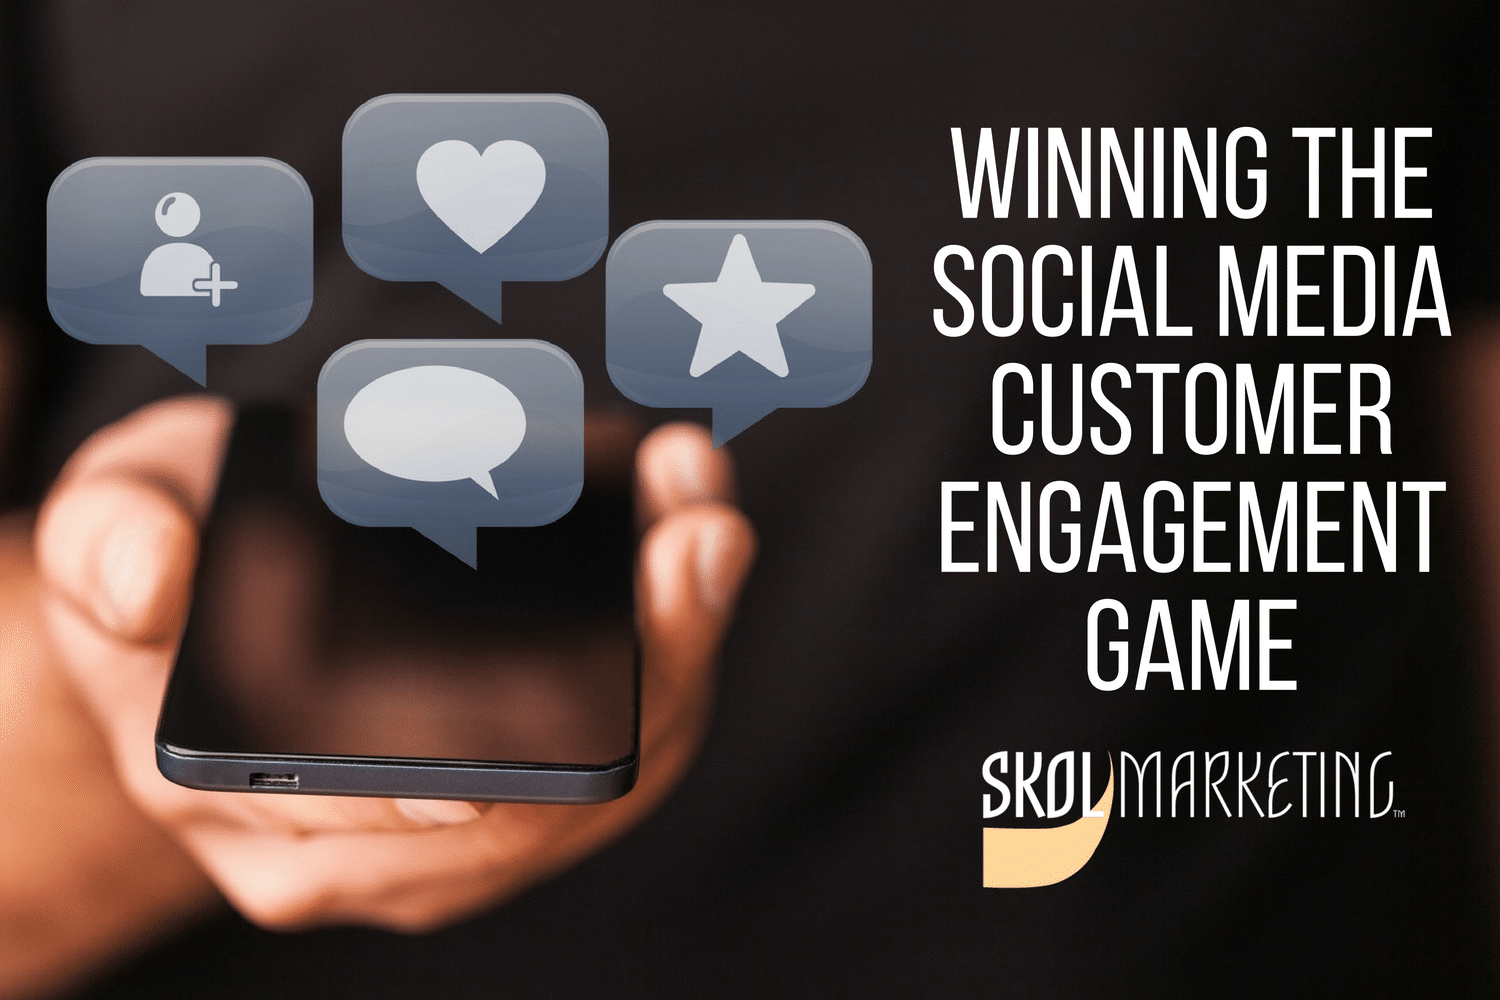 winning the social media customer engagement game skol marketing, minneapolis MN